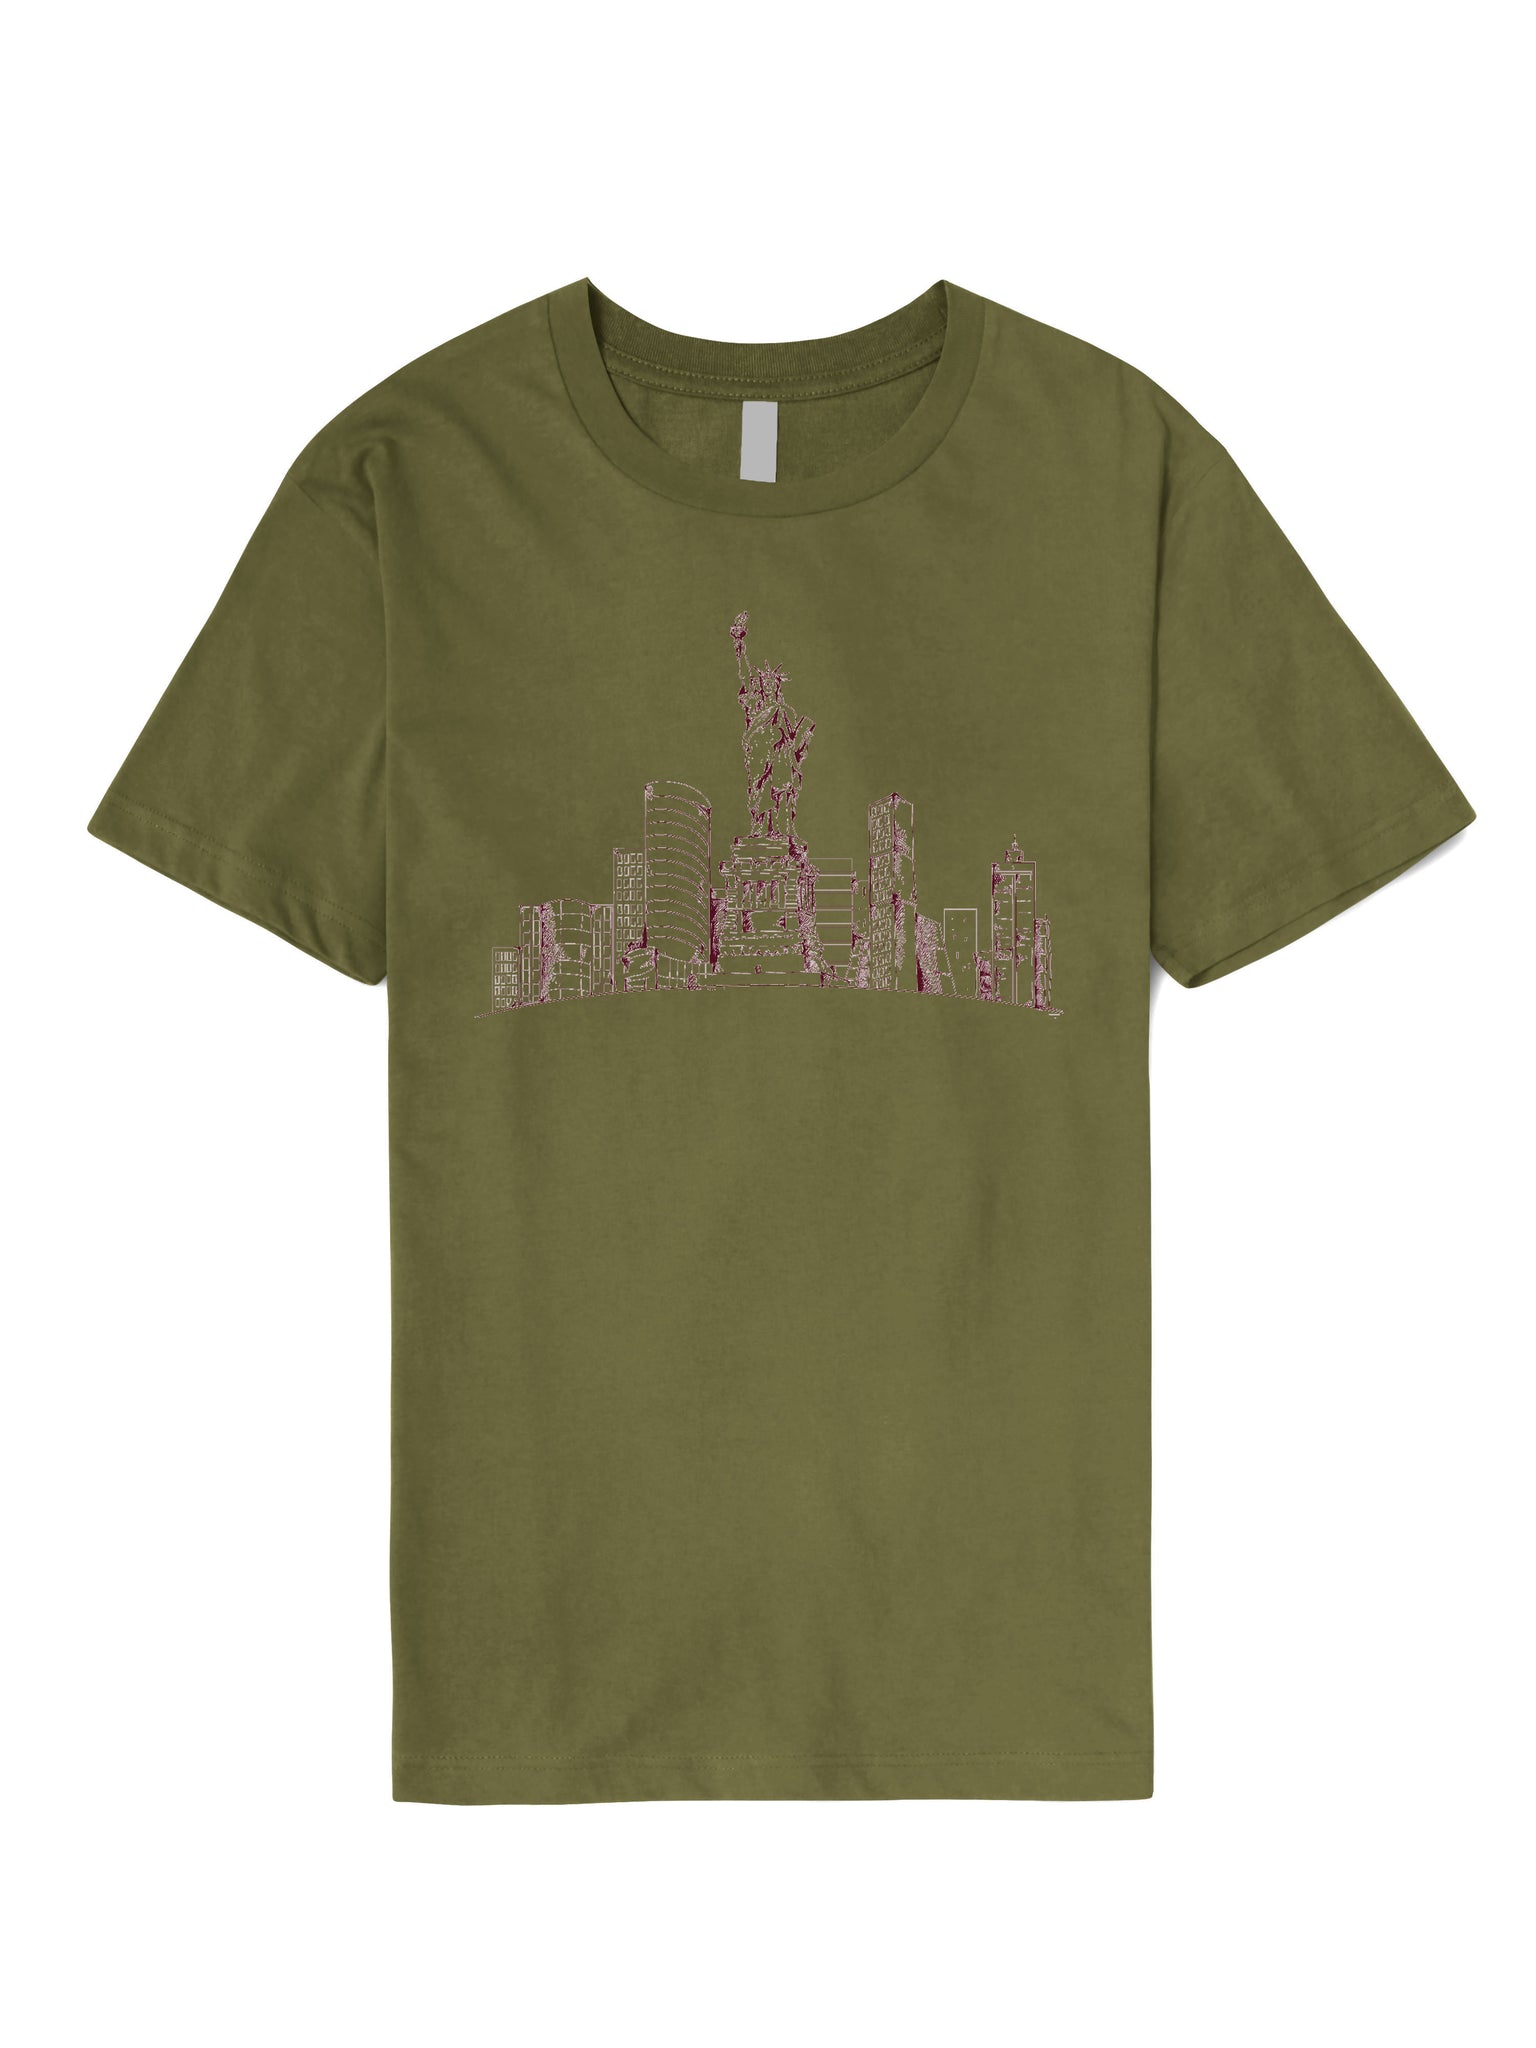 New York City Skyline - & Shirt | Graphic T Tops Tank and Beyond Hat T-Shirt